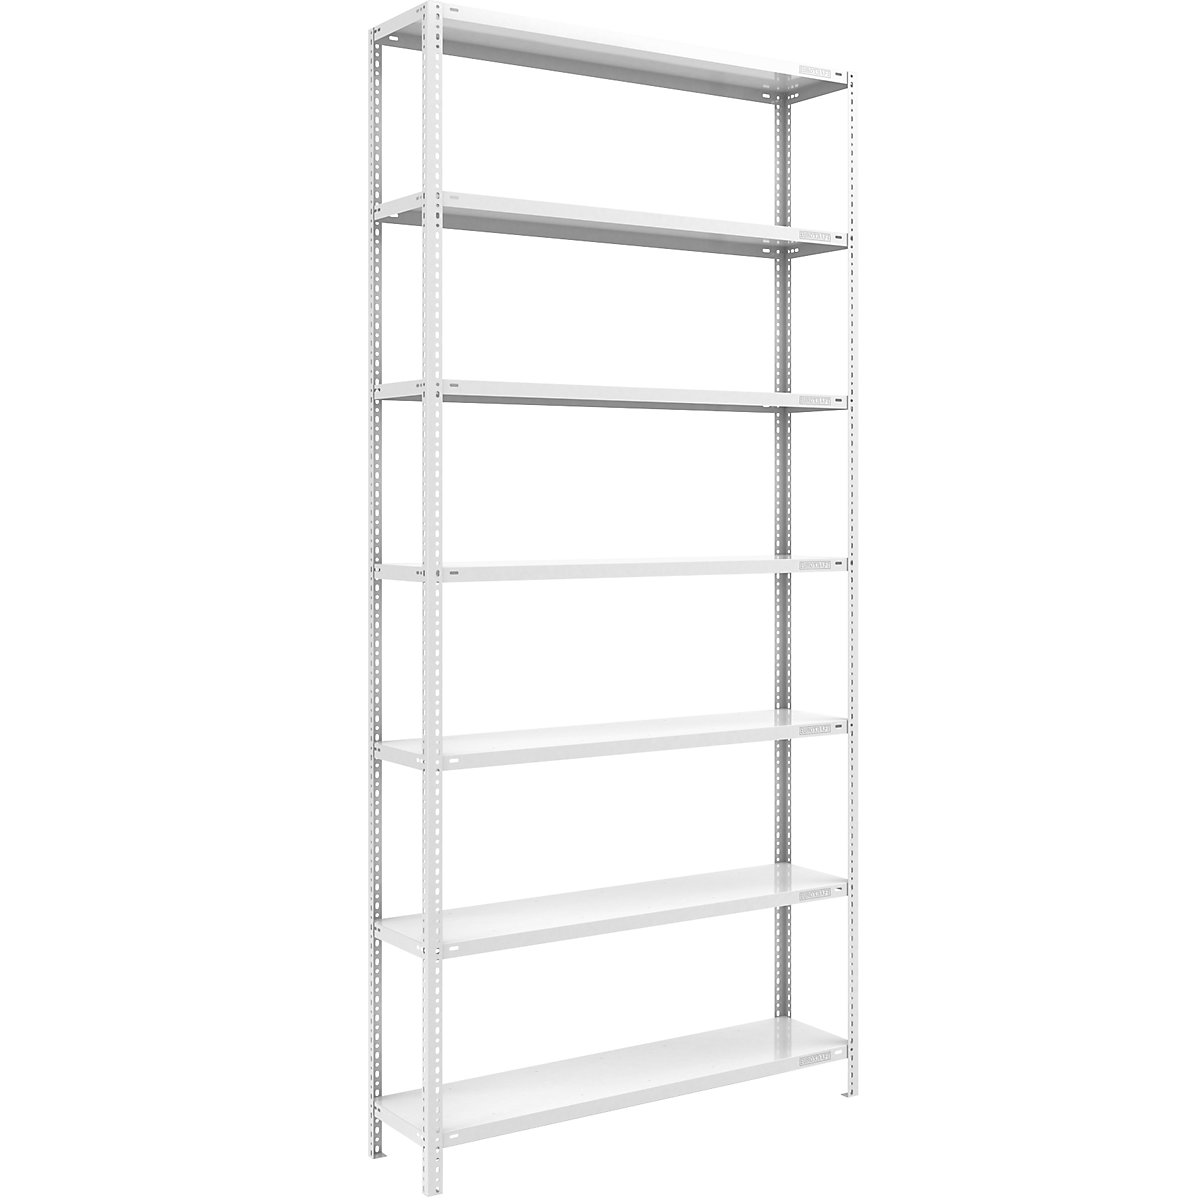 Bolt-together shelf unit, light duty, plastic coated – eurokraft pro, shelf unit height 3000 mm, shelf width 1300 mm, depth 400 mm, standard shelf unit-11